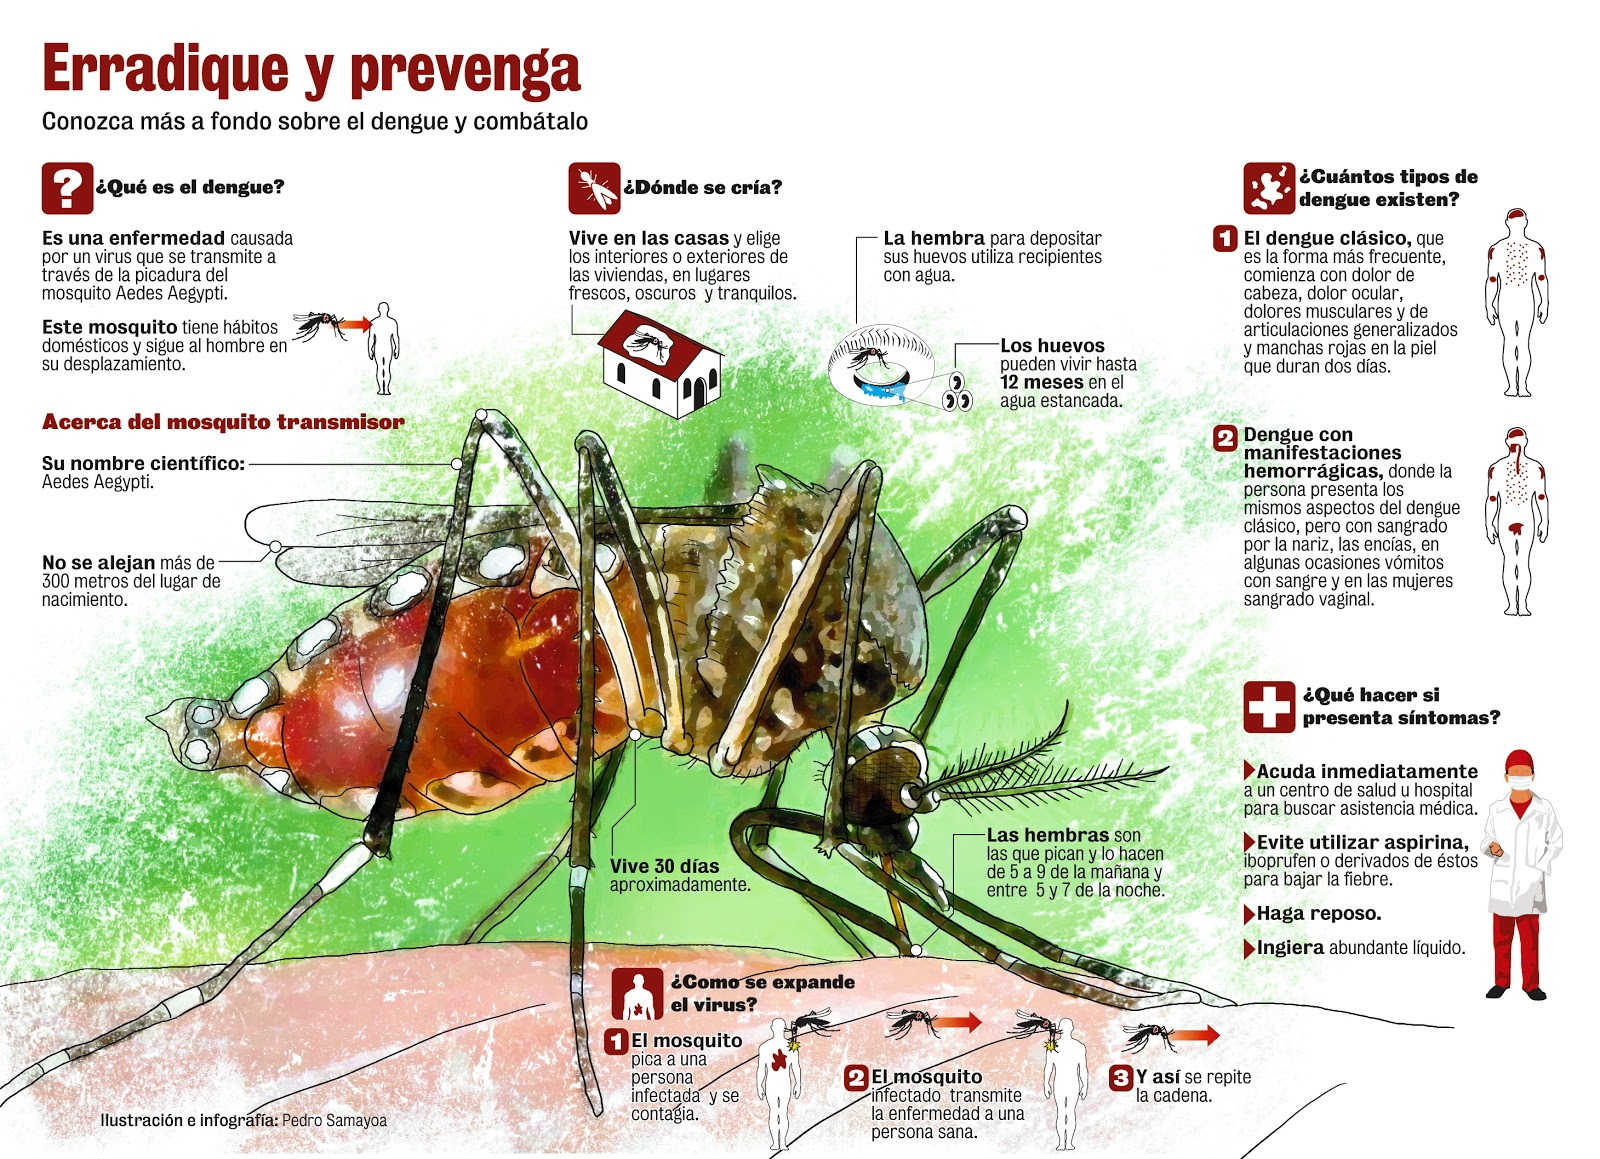 Das ist der Anfang vom Ende - Pagina 13 Dengue